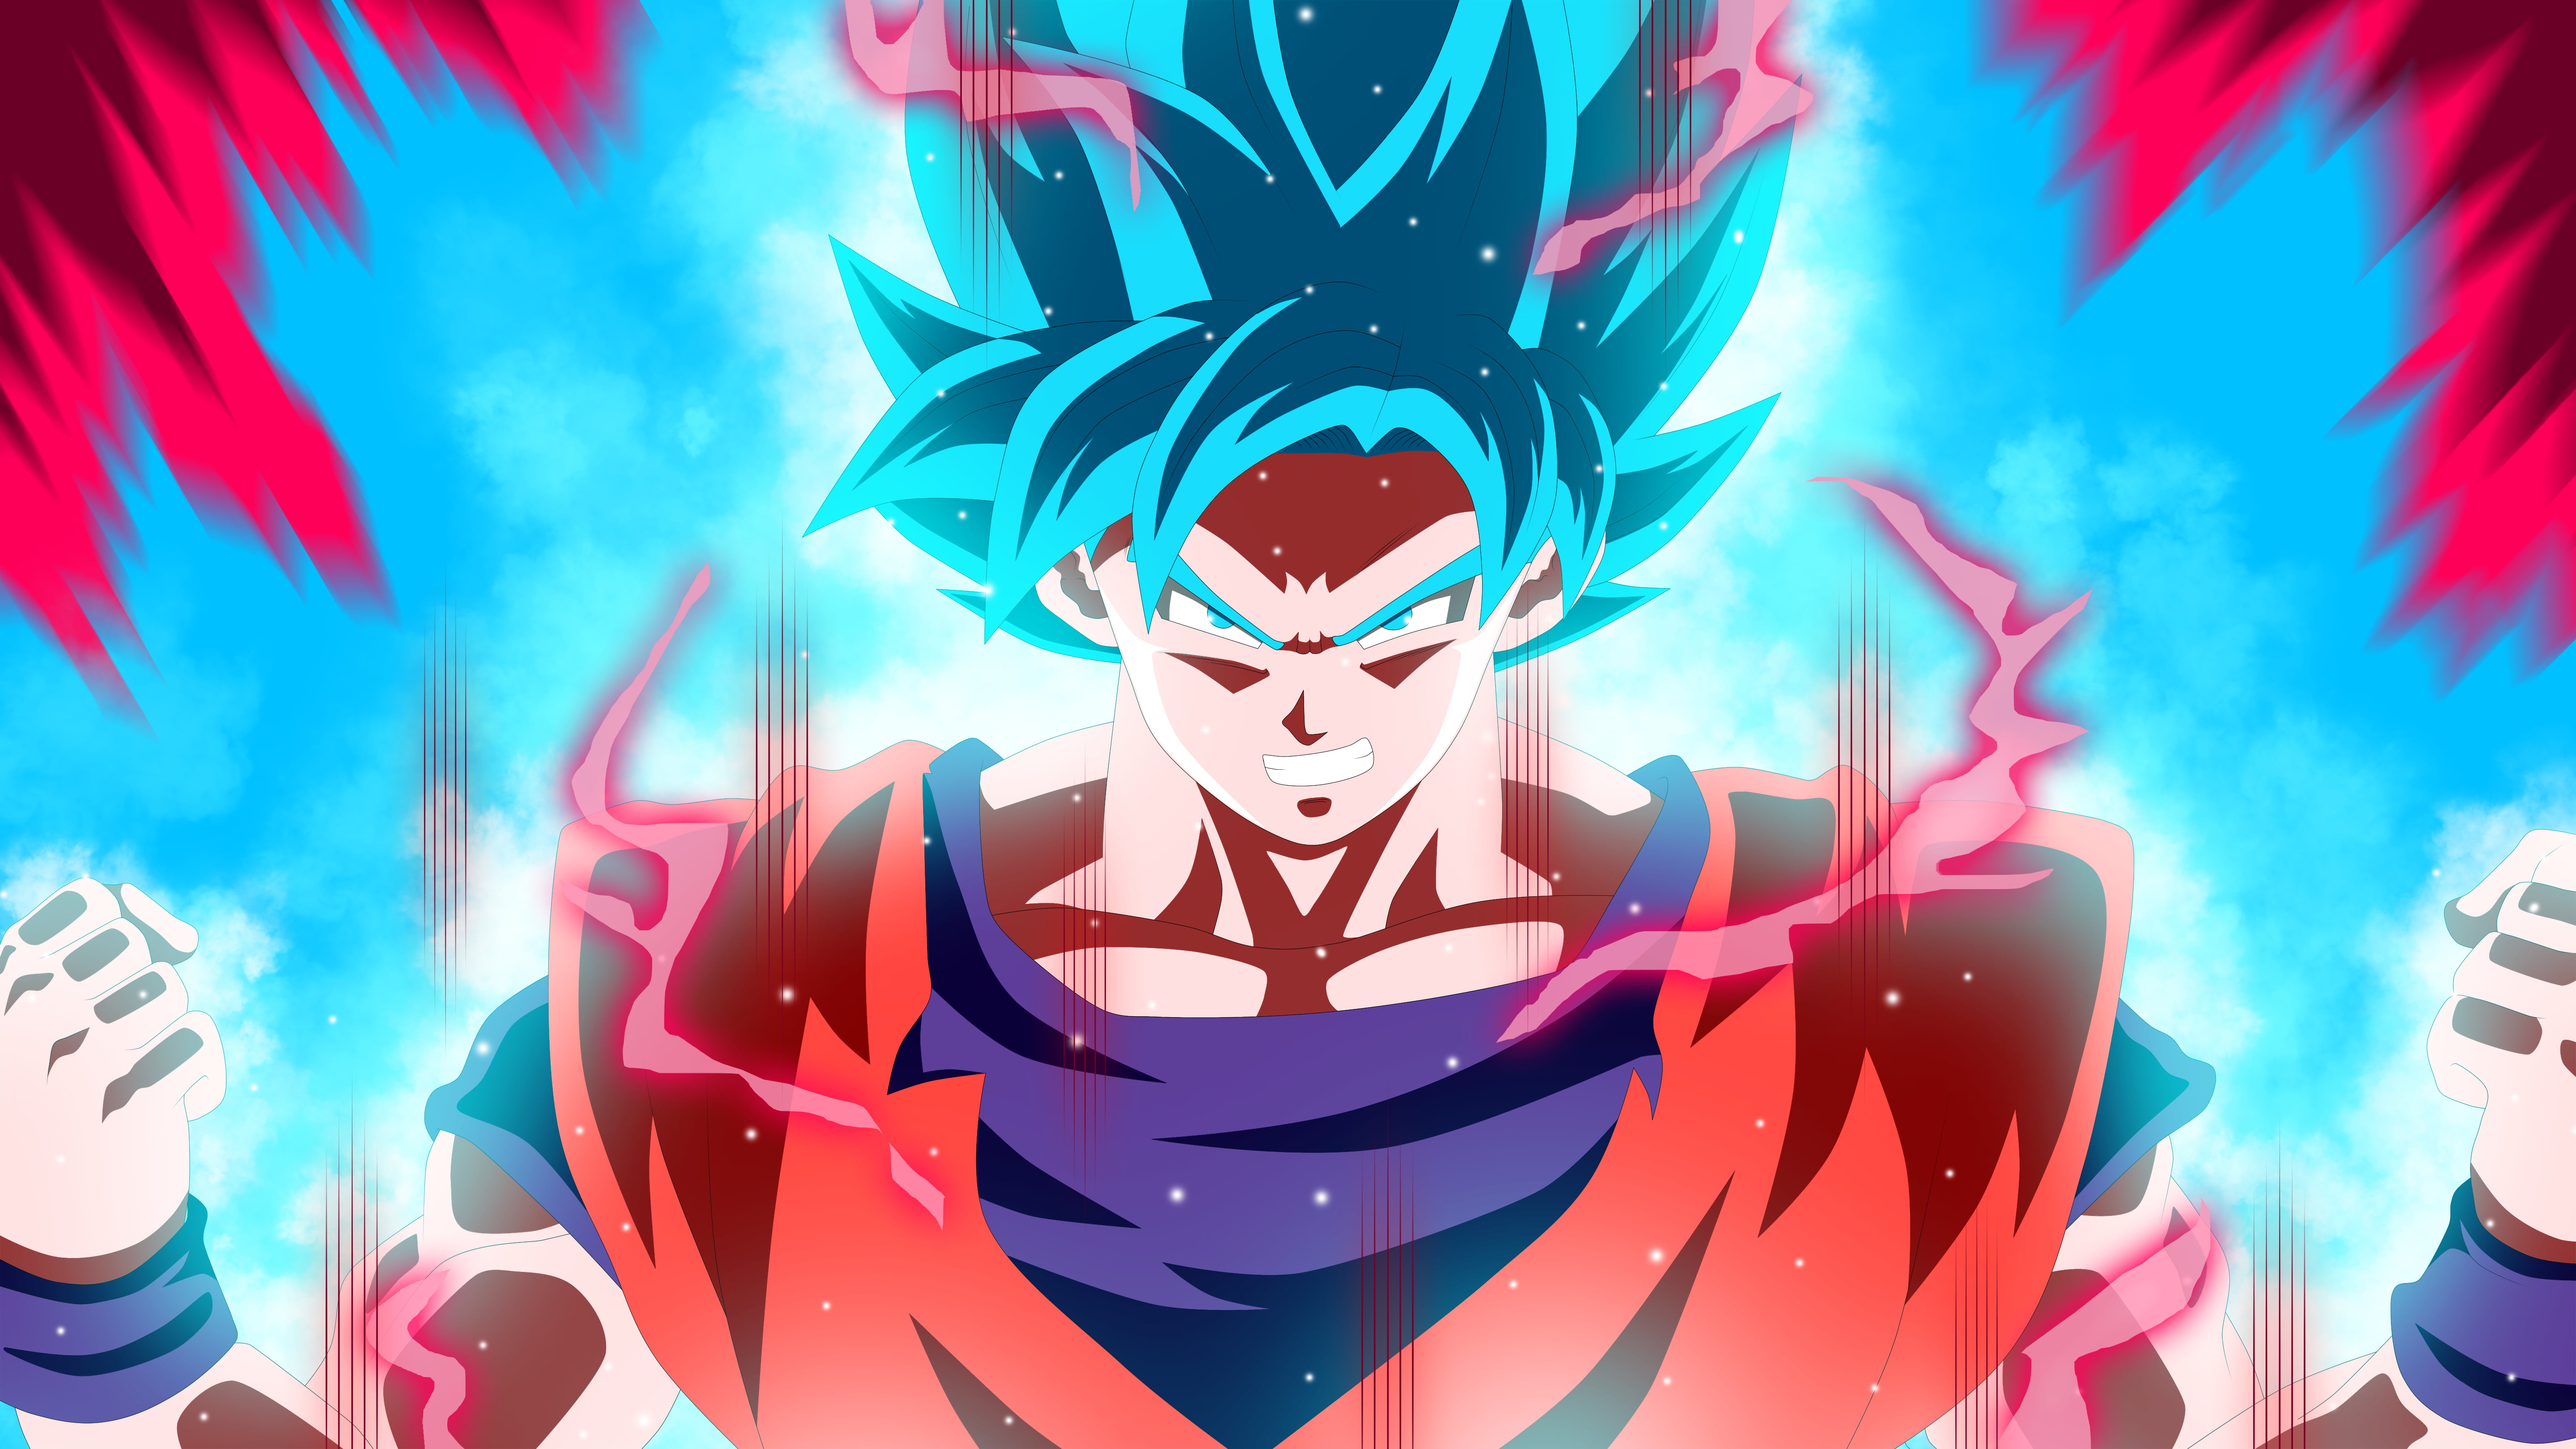 Goku's Blue Hair Transformation - wide 6